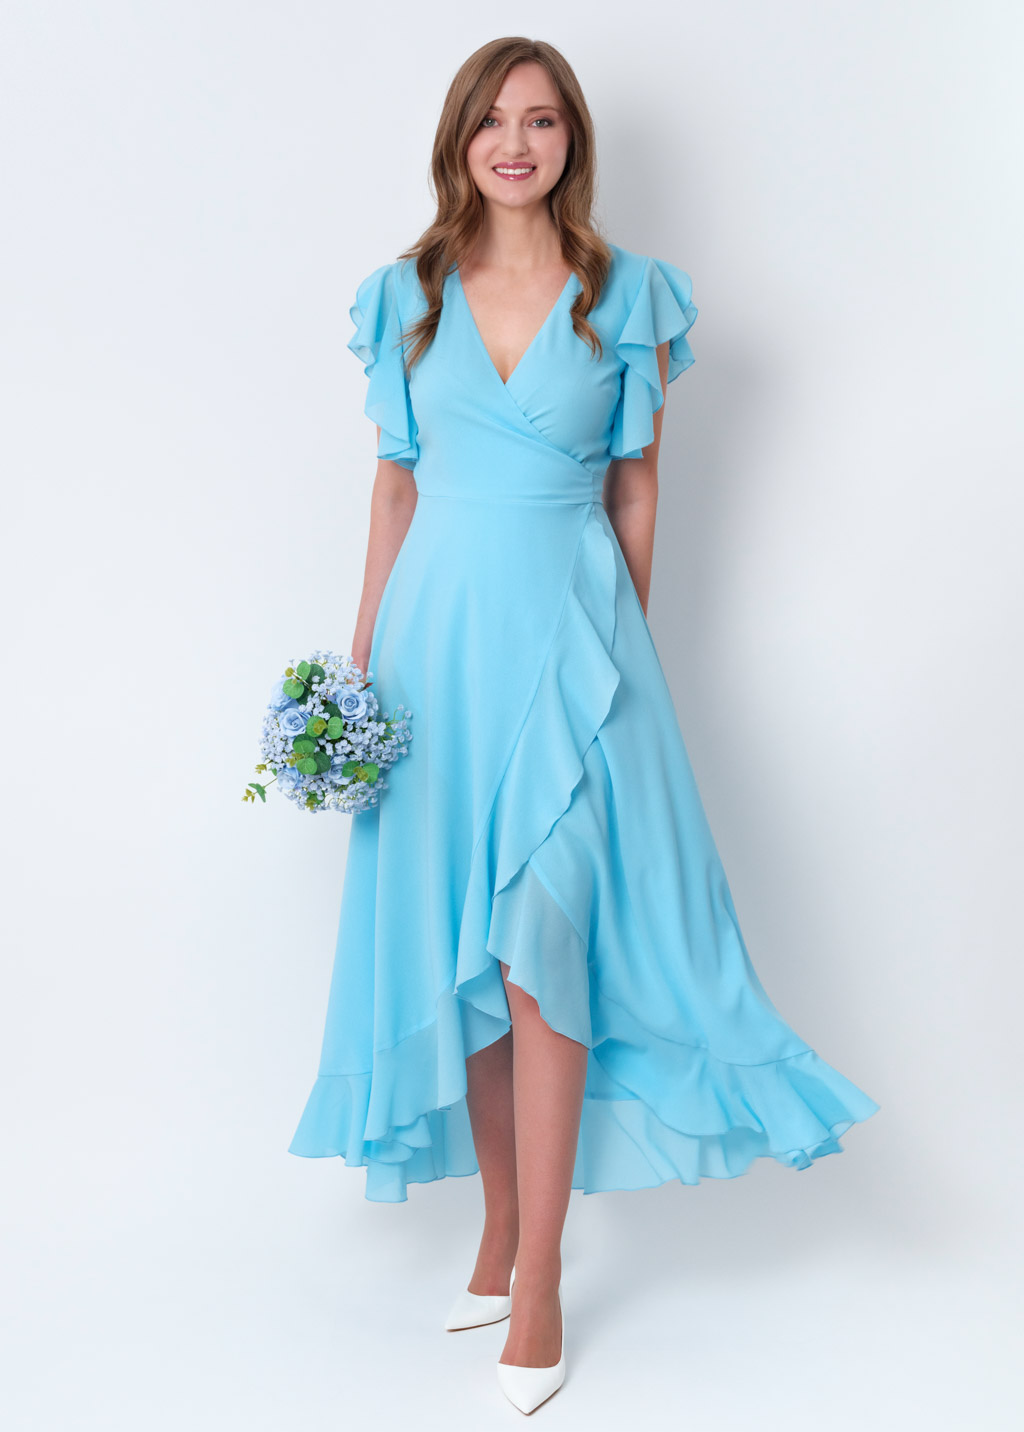 Sky blue chiffon wrap dress